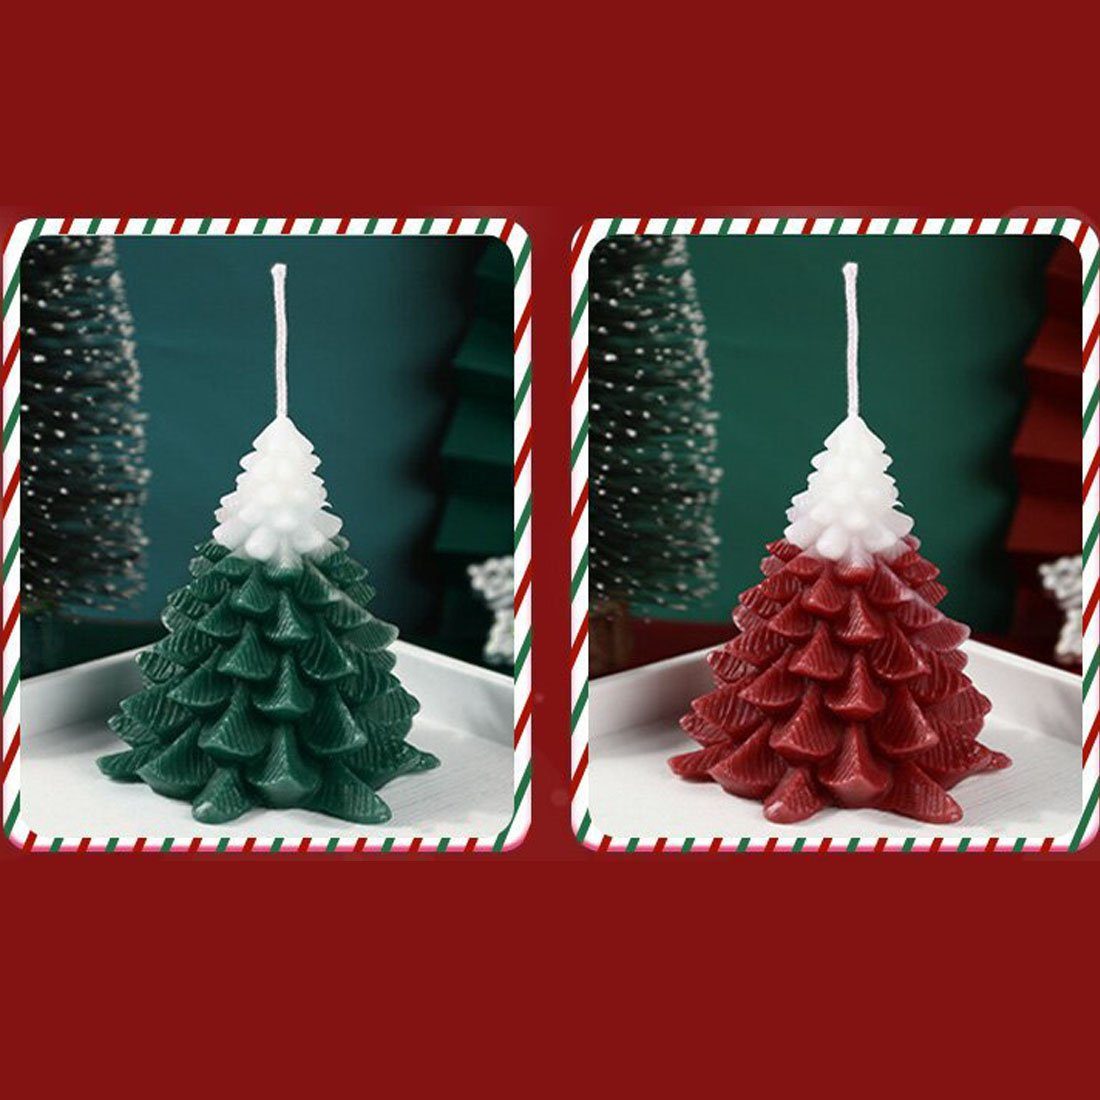 DÖRÖY Deko-Ornamente kreative Weihnachtsbaum-Duftkerze 2er-Set, Christbaumkerzen festliche